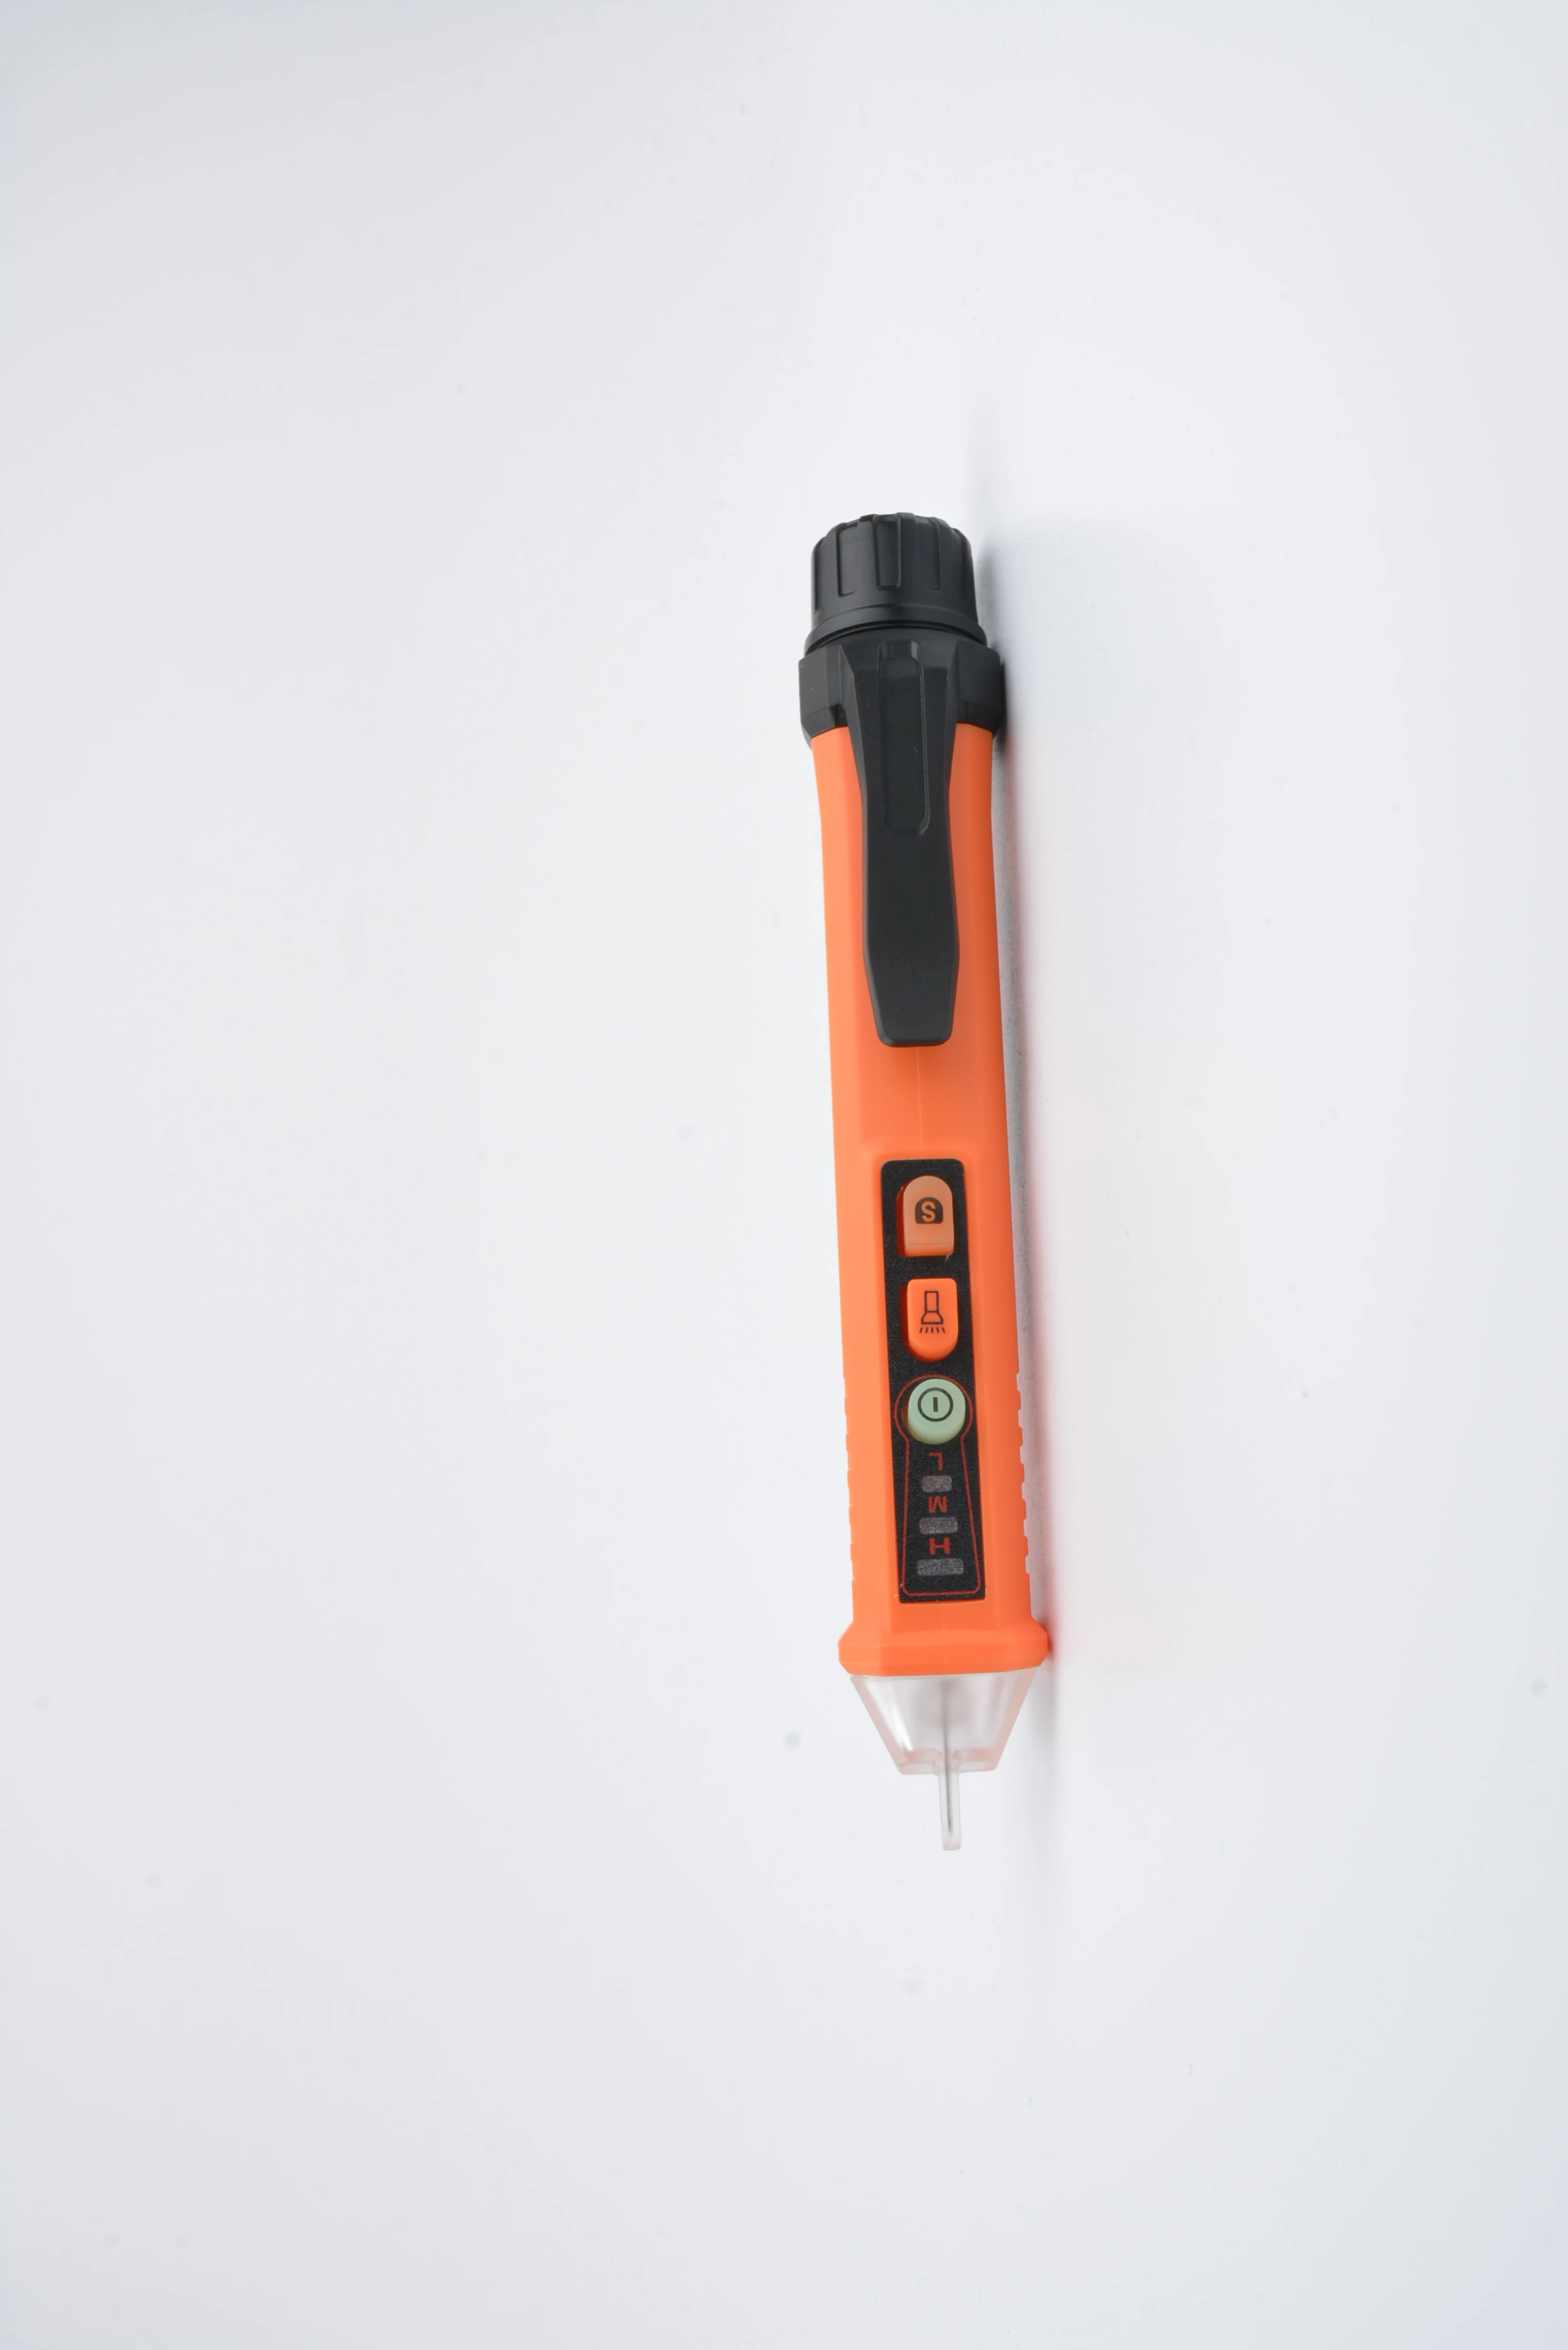 PEAKMETER PM8909 Intelligent Non Contact AC Voltage Accurately Tester Pen Circuit Auto adjust sensitivity Detector